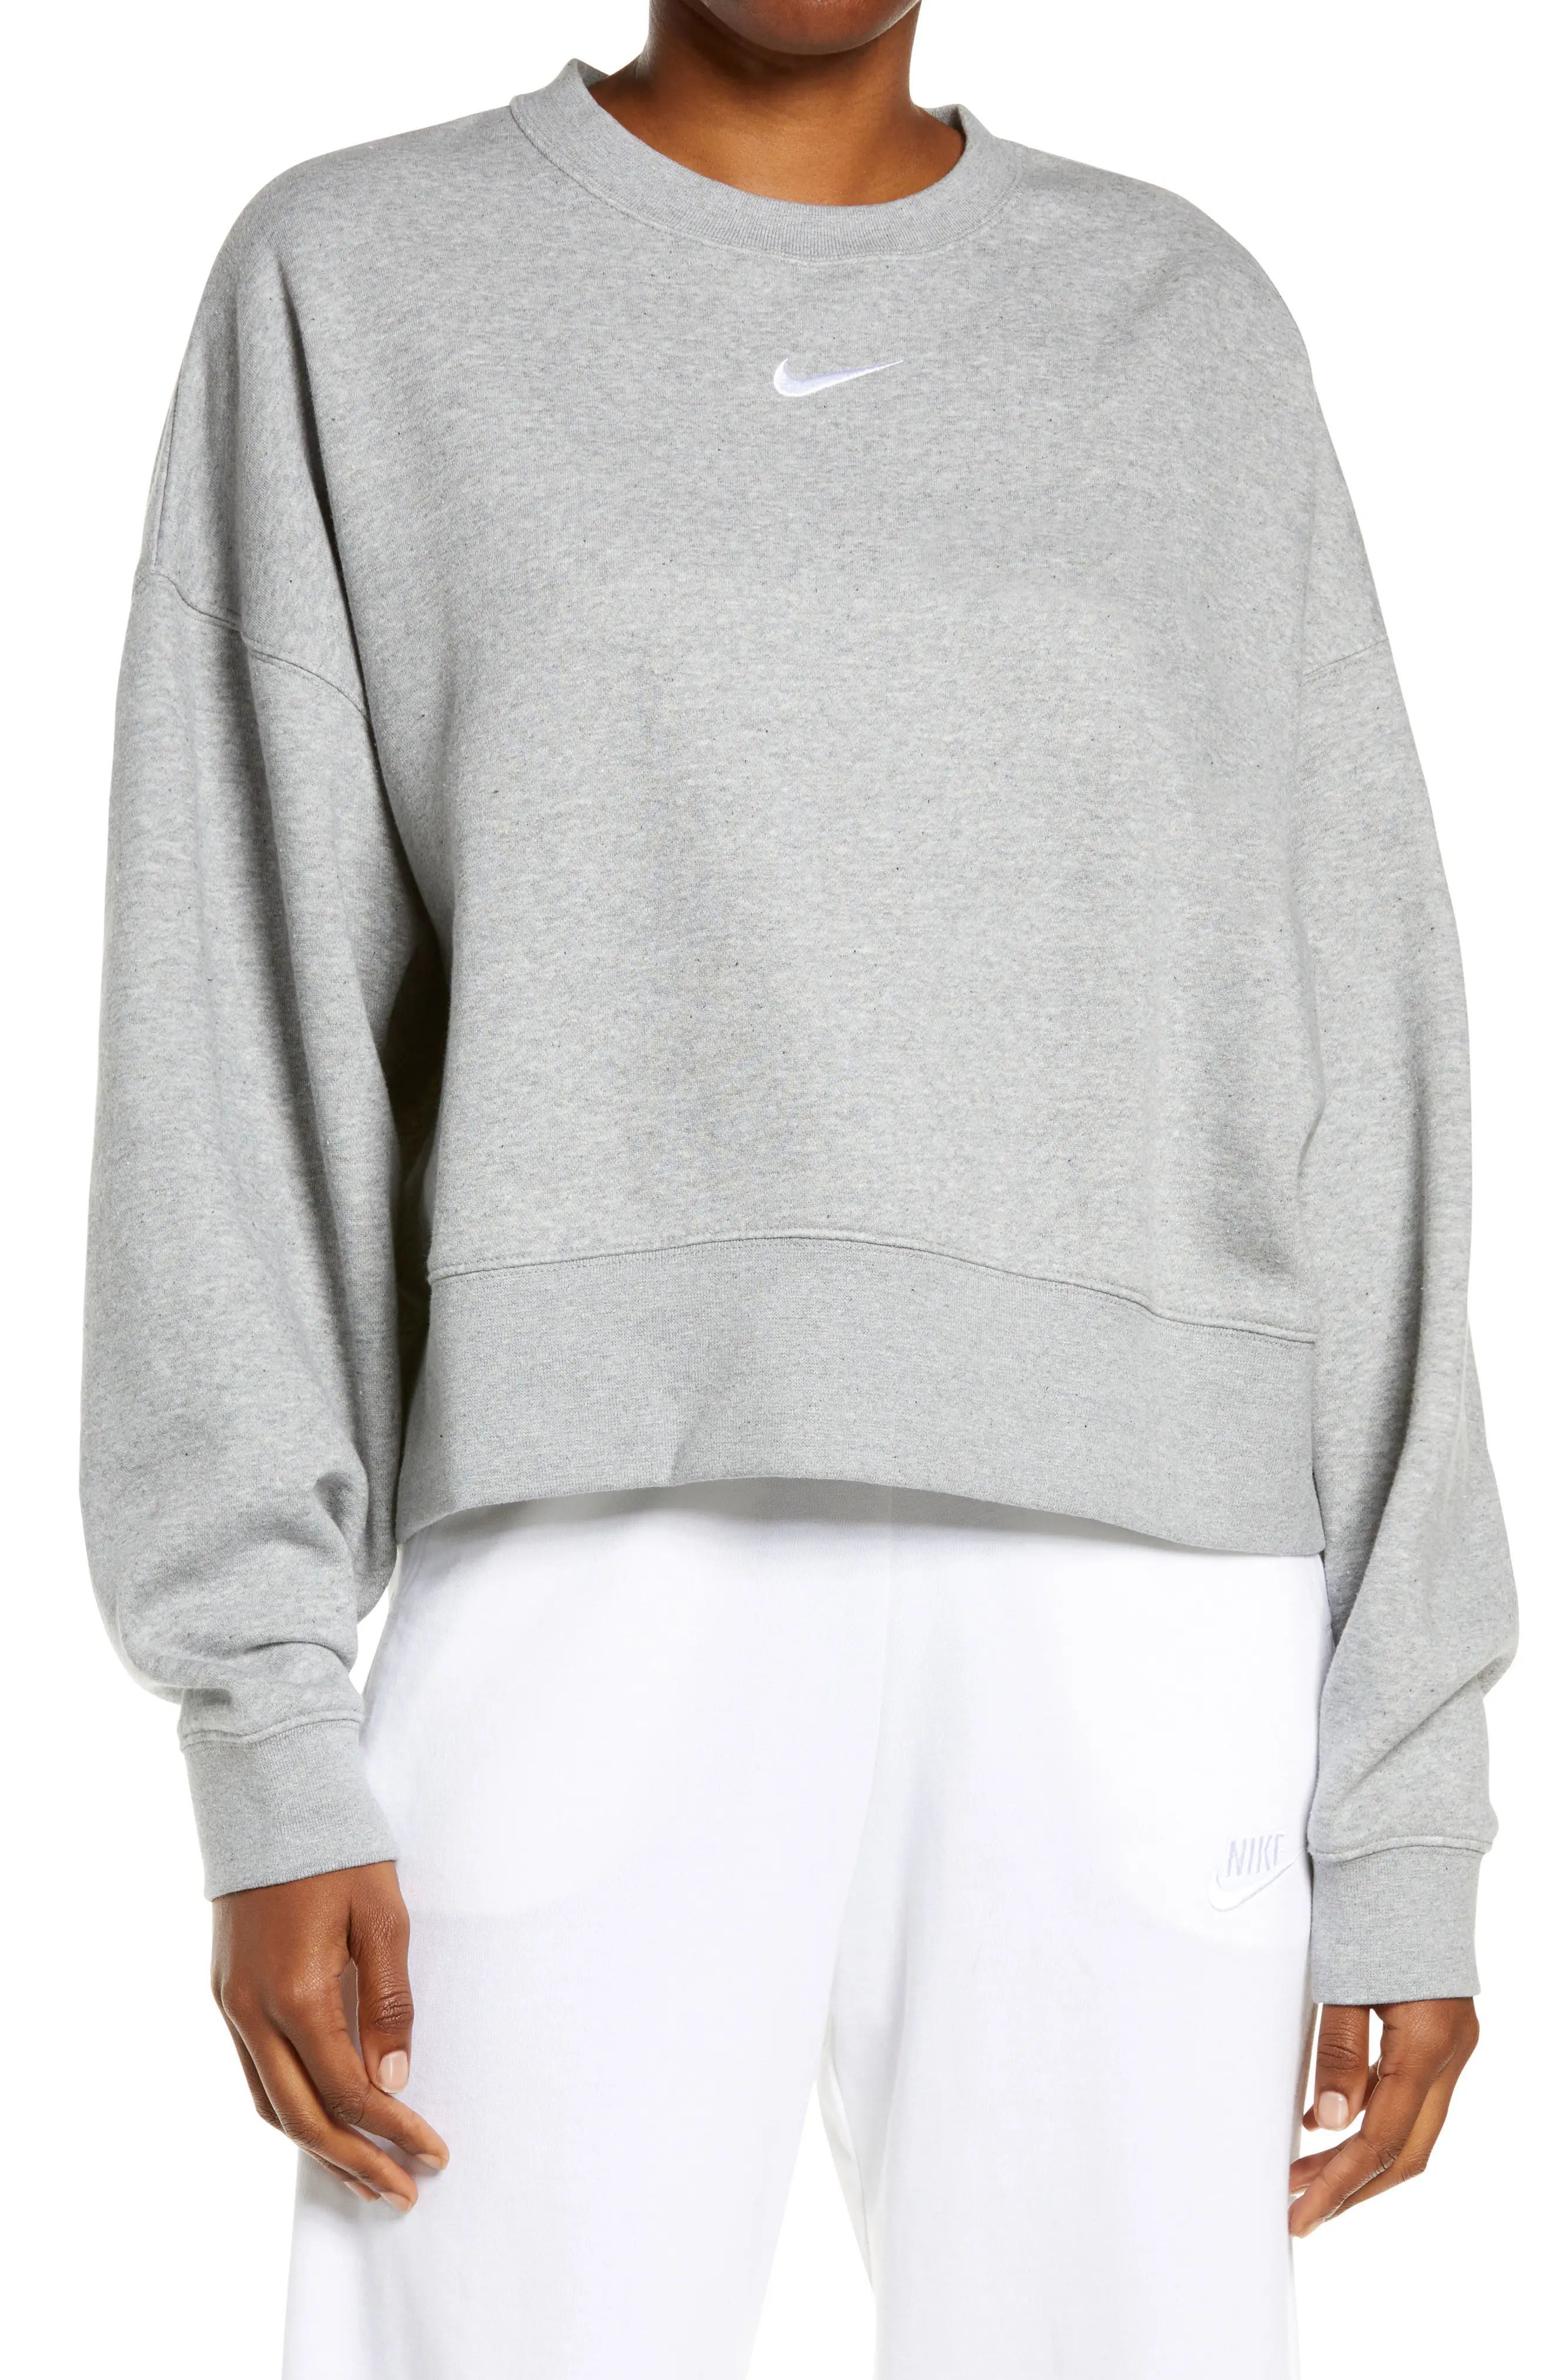 Nike Sportswear Essential Oversize Sweatshirt in Dark Grey Heather/White at Nordstrom, Size X-Small | Nordstrom